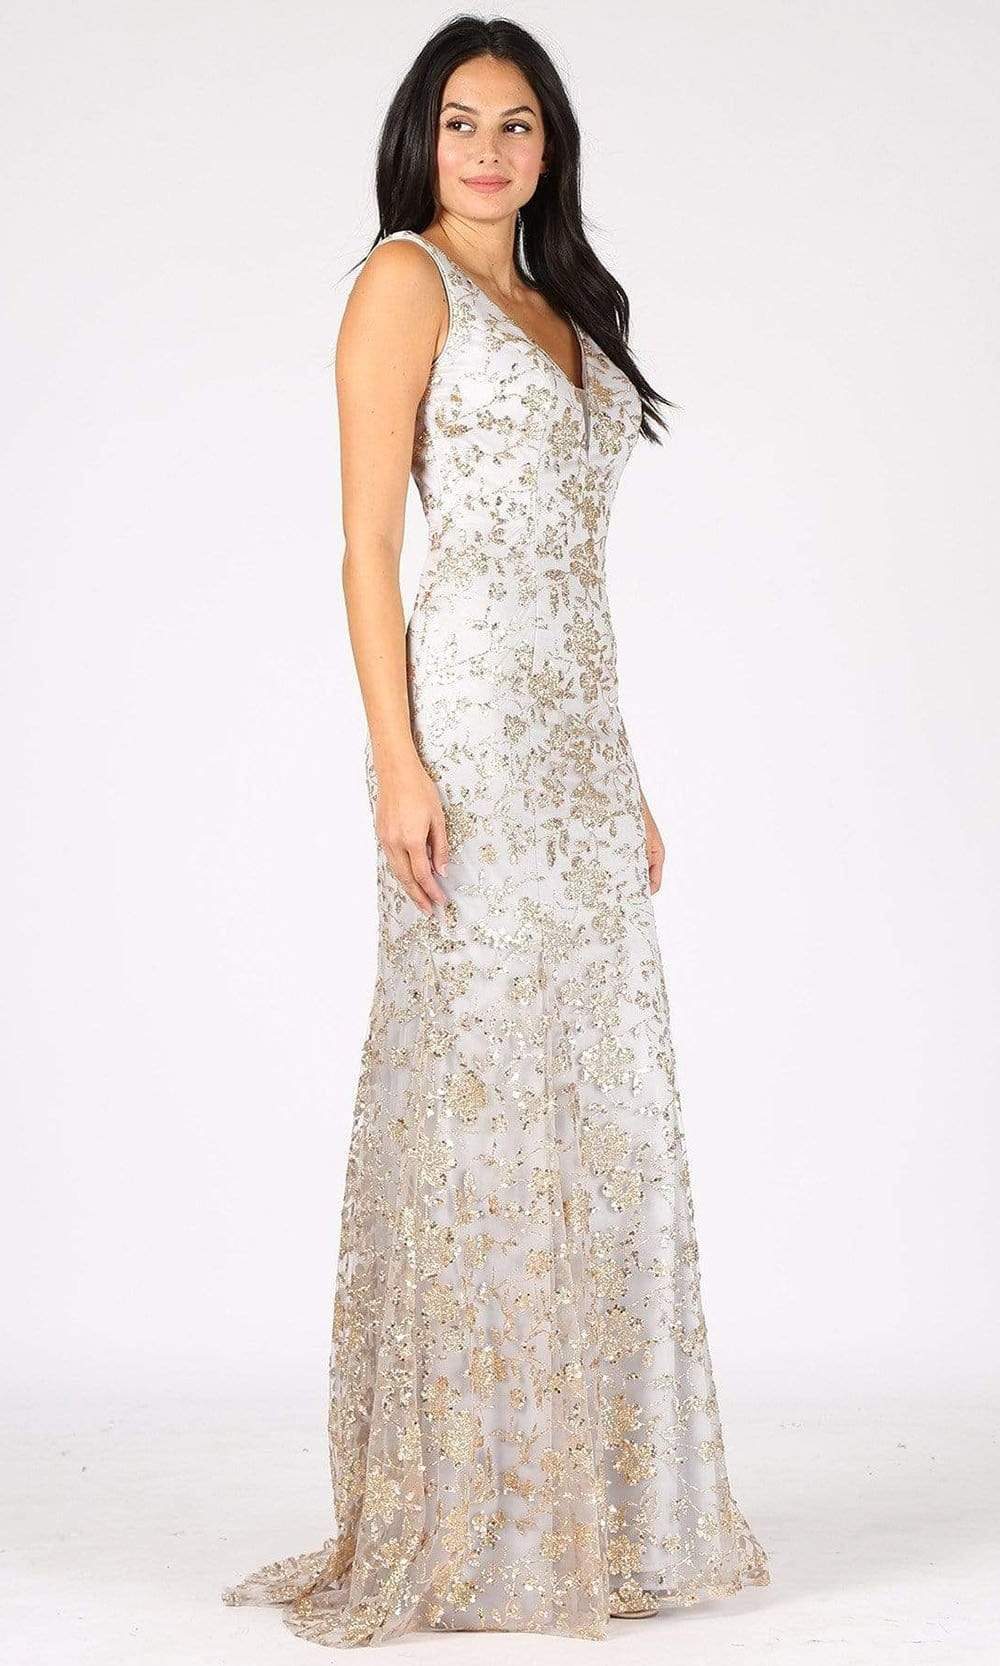 Image of Eureka Fashion - 9706 Floral Glittery Sheath Dress